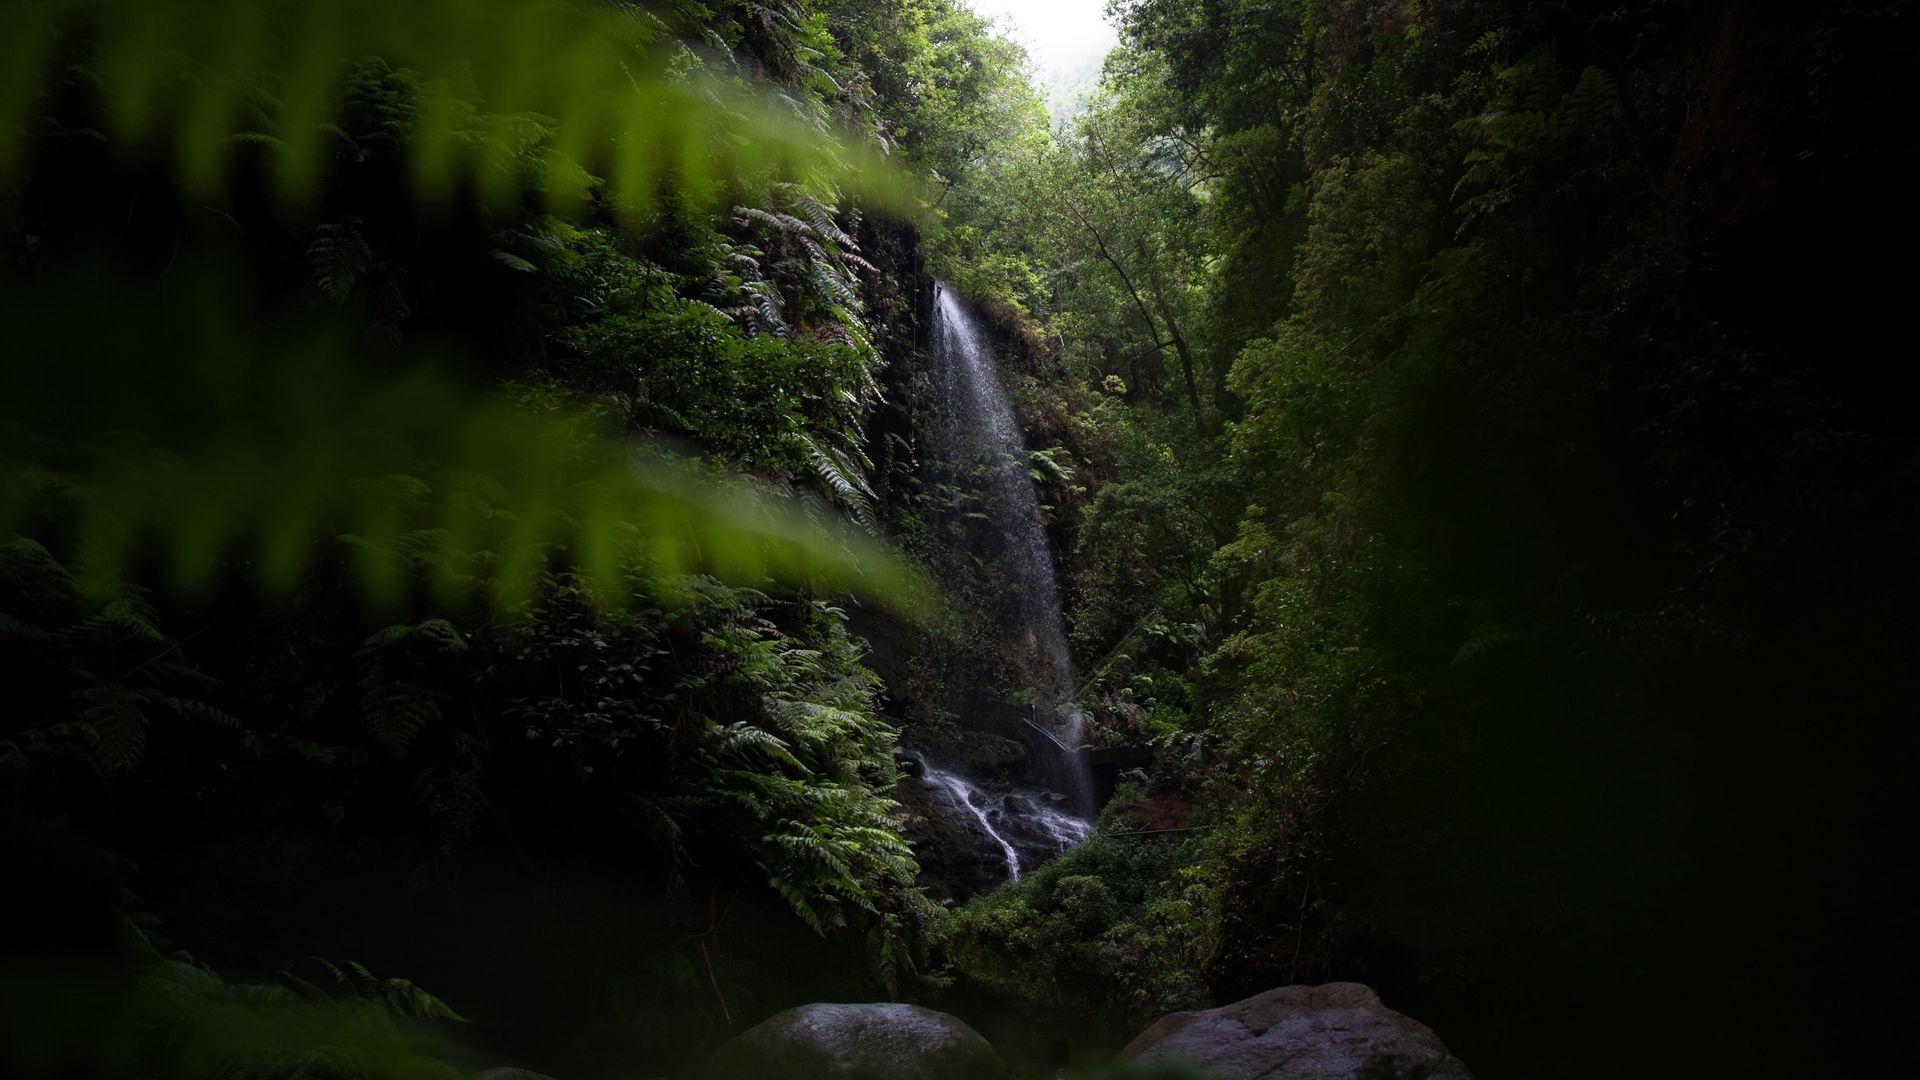 Download wallpaper 1920x1080 waterfall, jungle, dark, vegetation, nature  full hd, hdtv, fhd, 1080p hd background